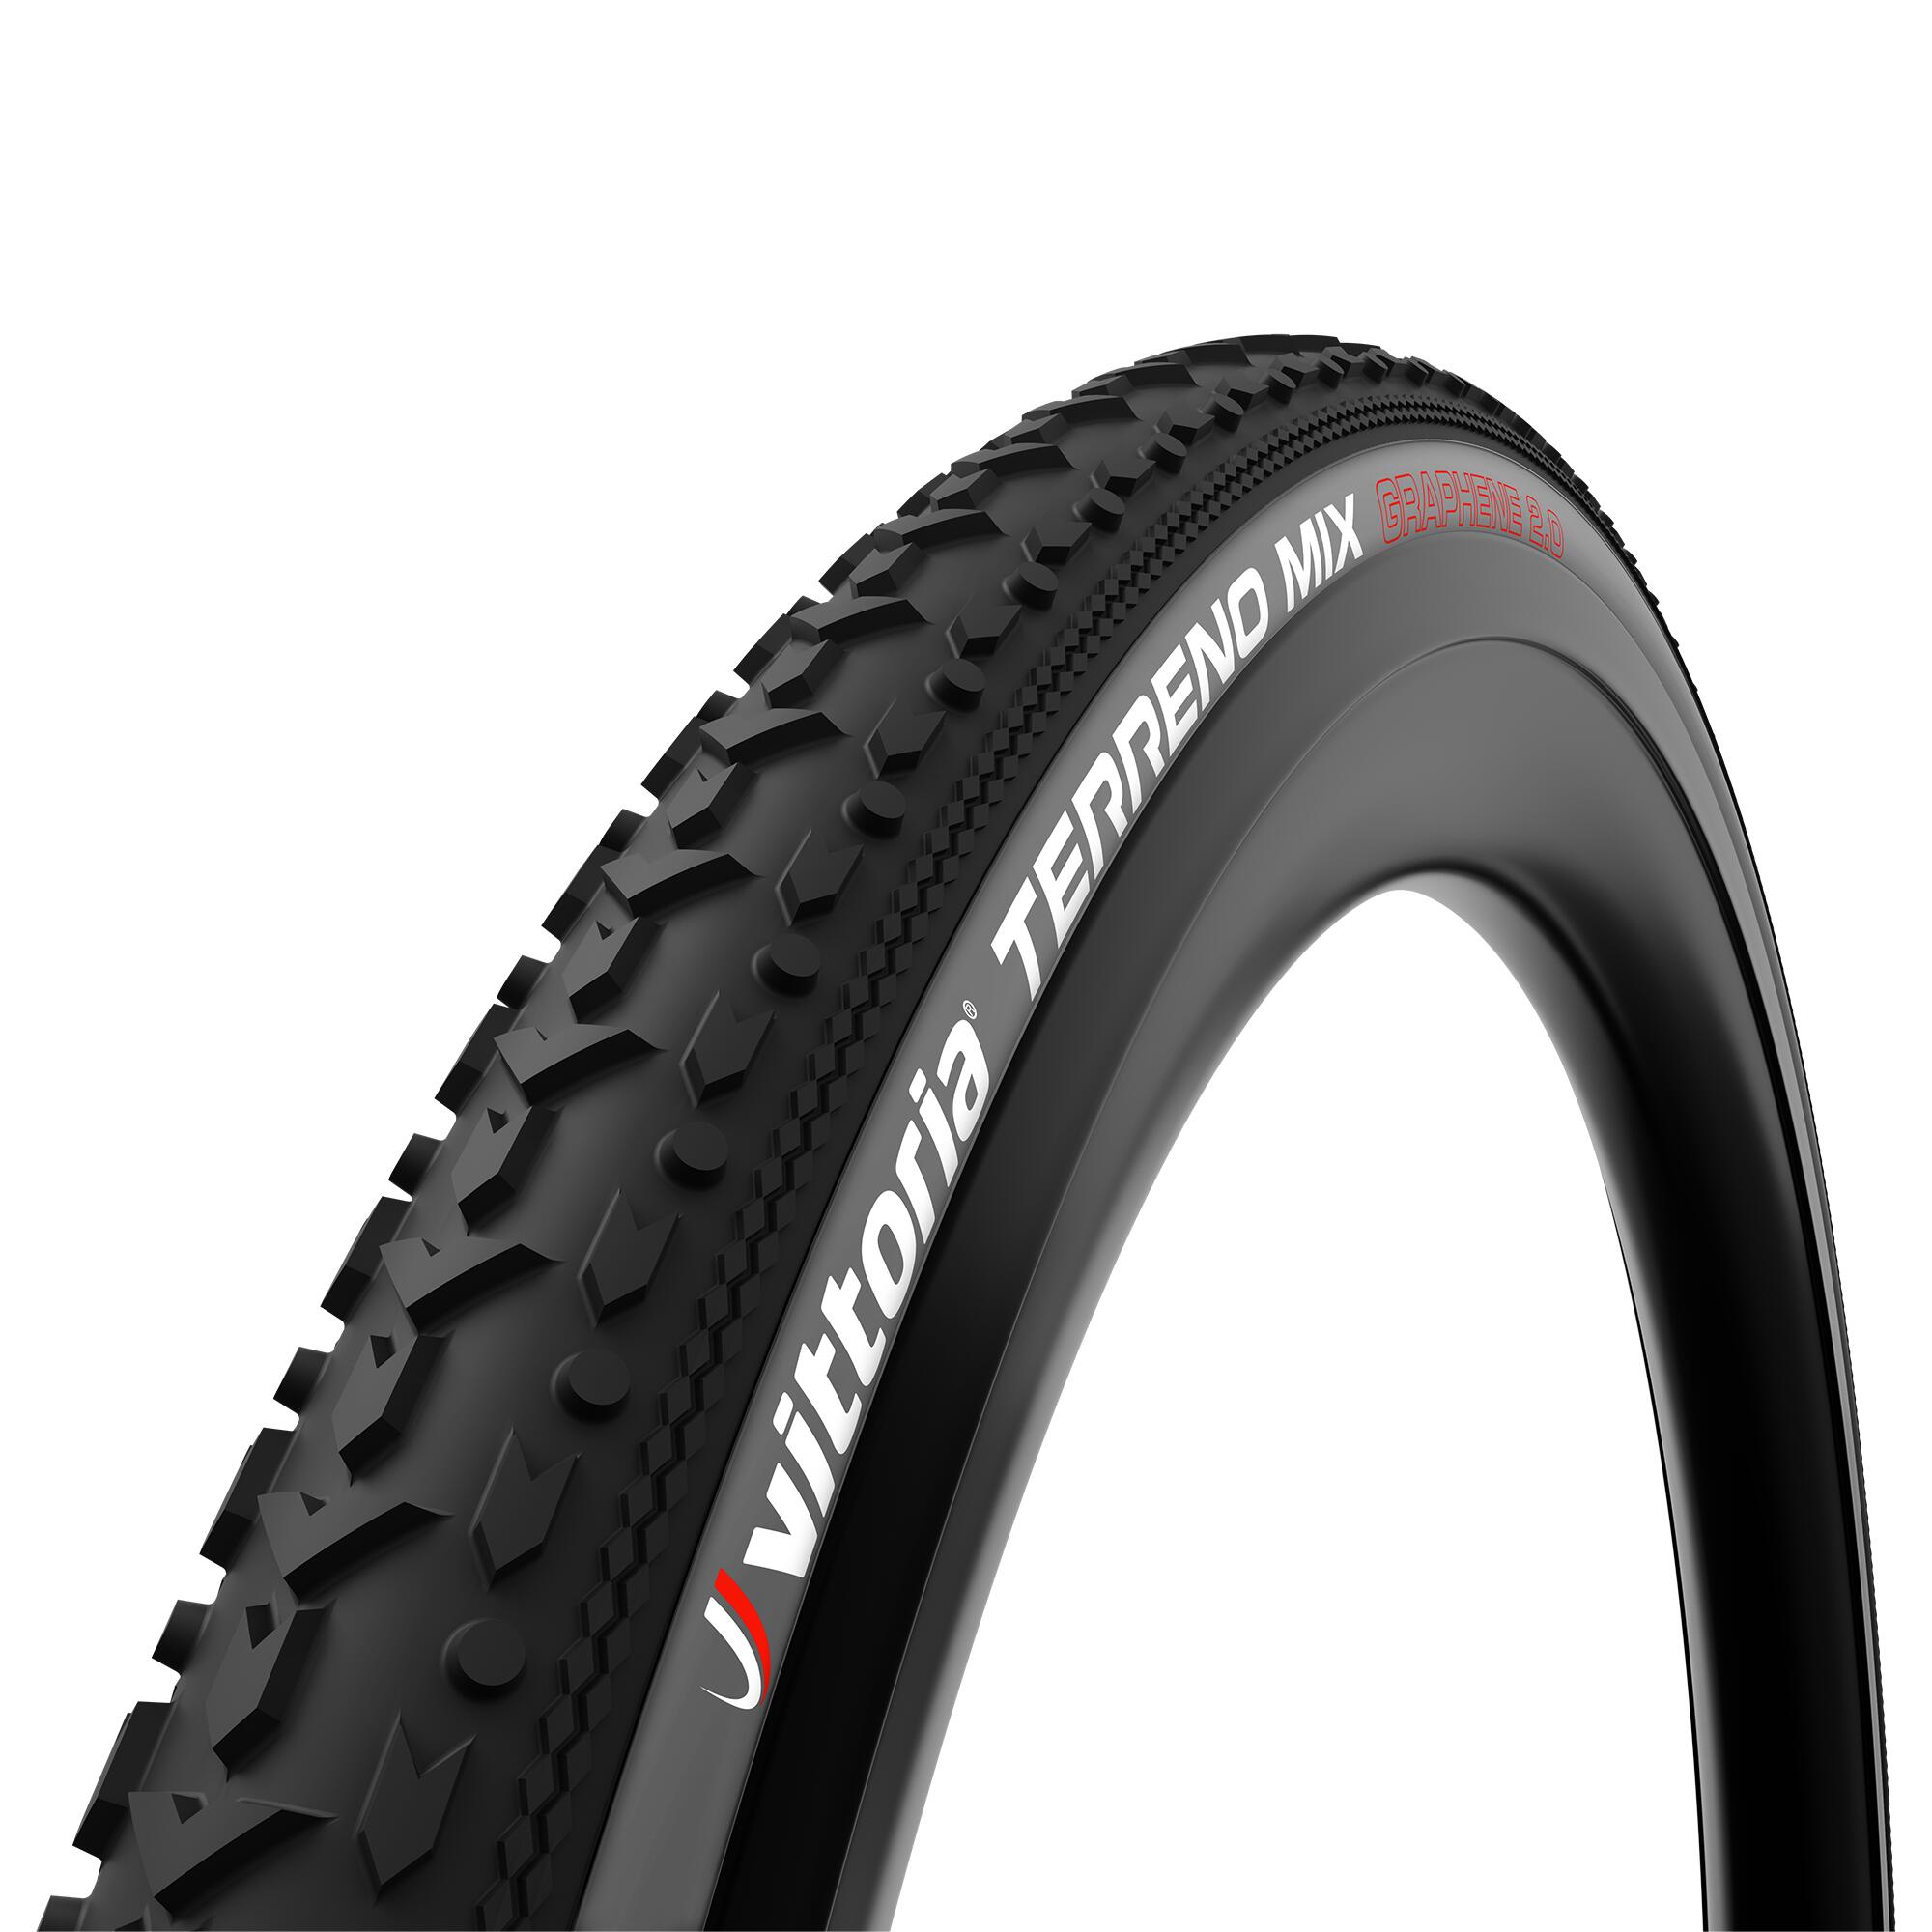 Vittoria Tubeless Ready Tnt Folding Bead Cyclocross Tyre 700x33 TeRReno Mix - Black